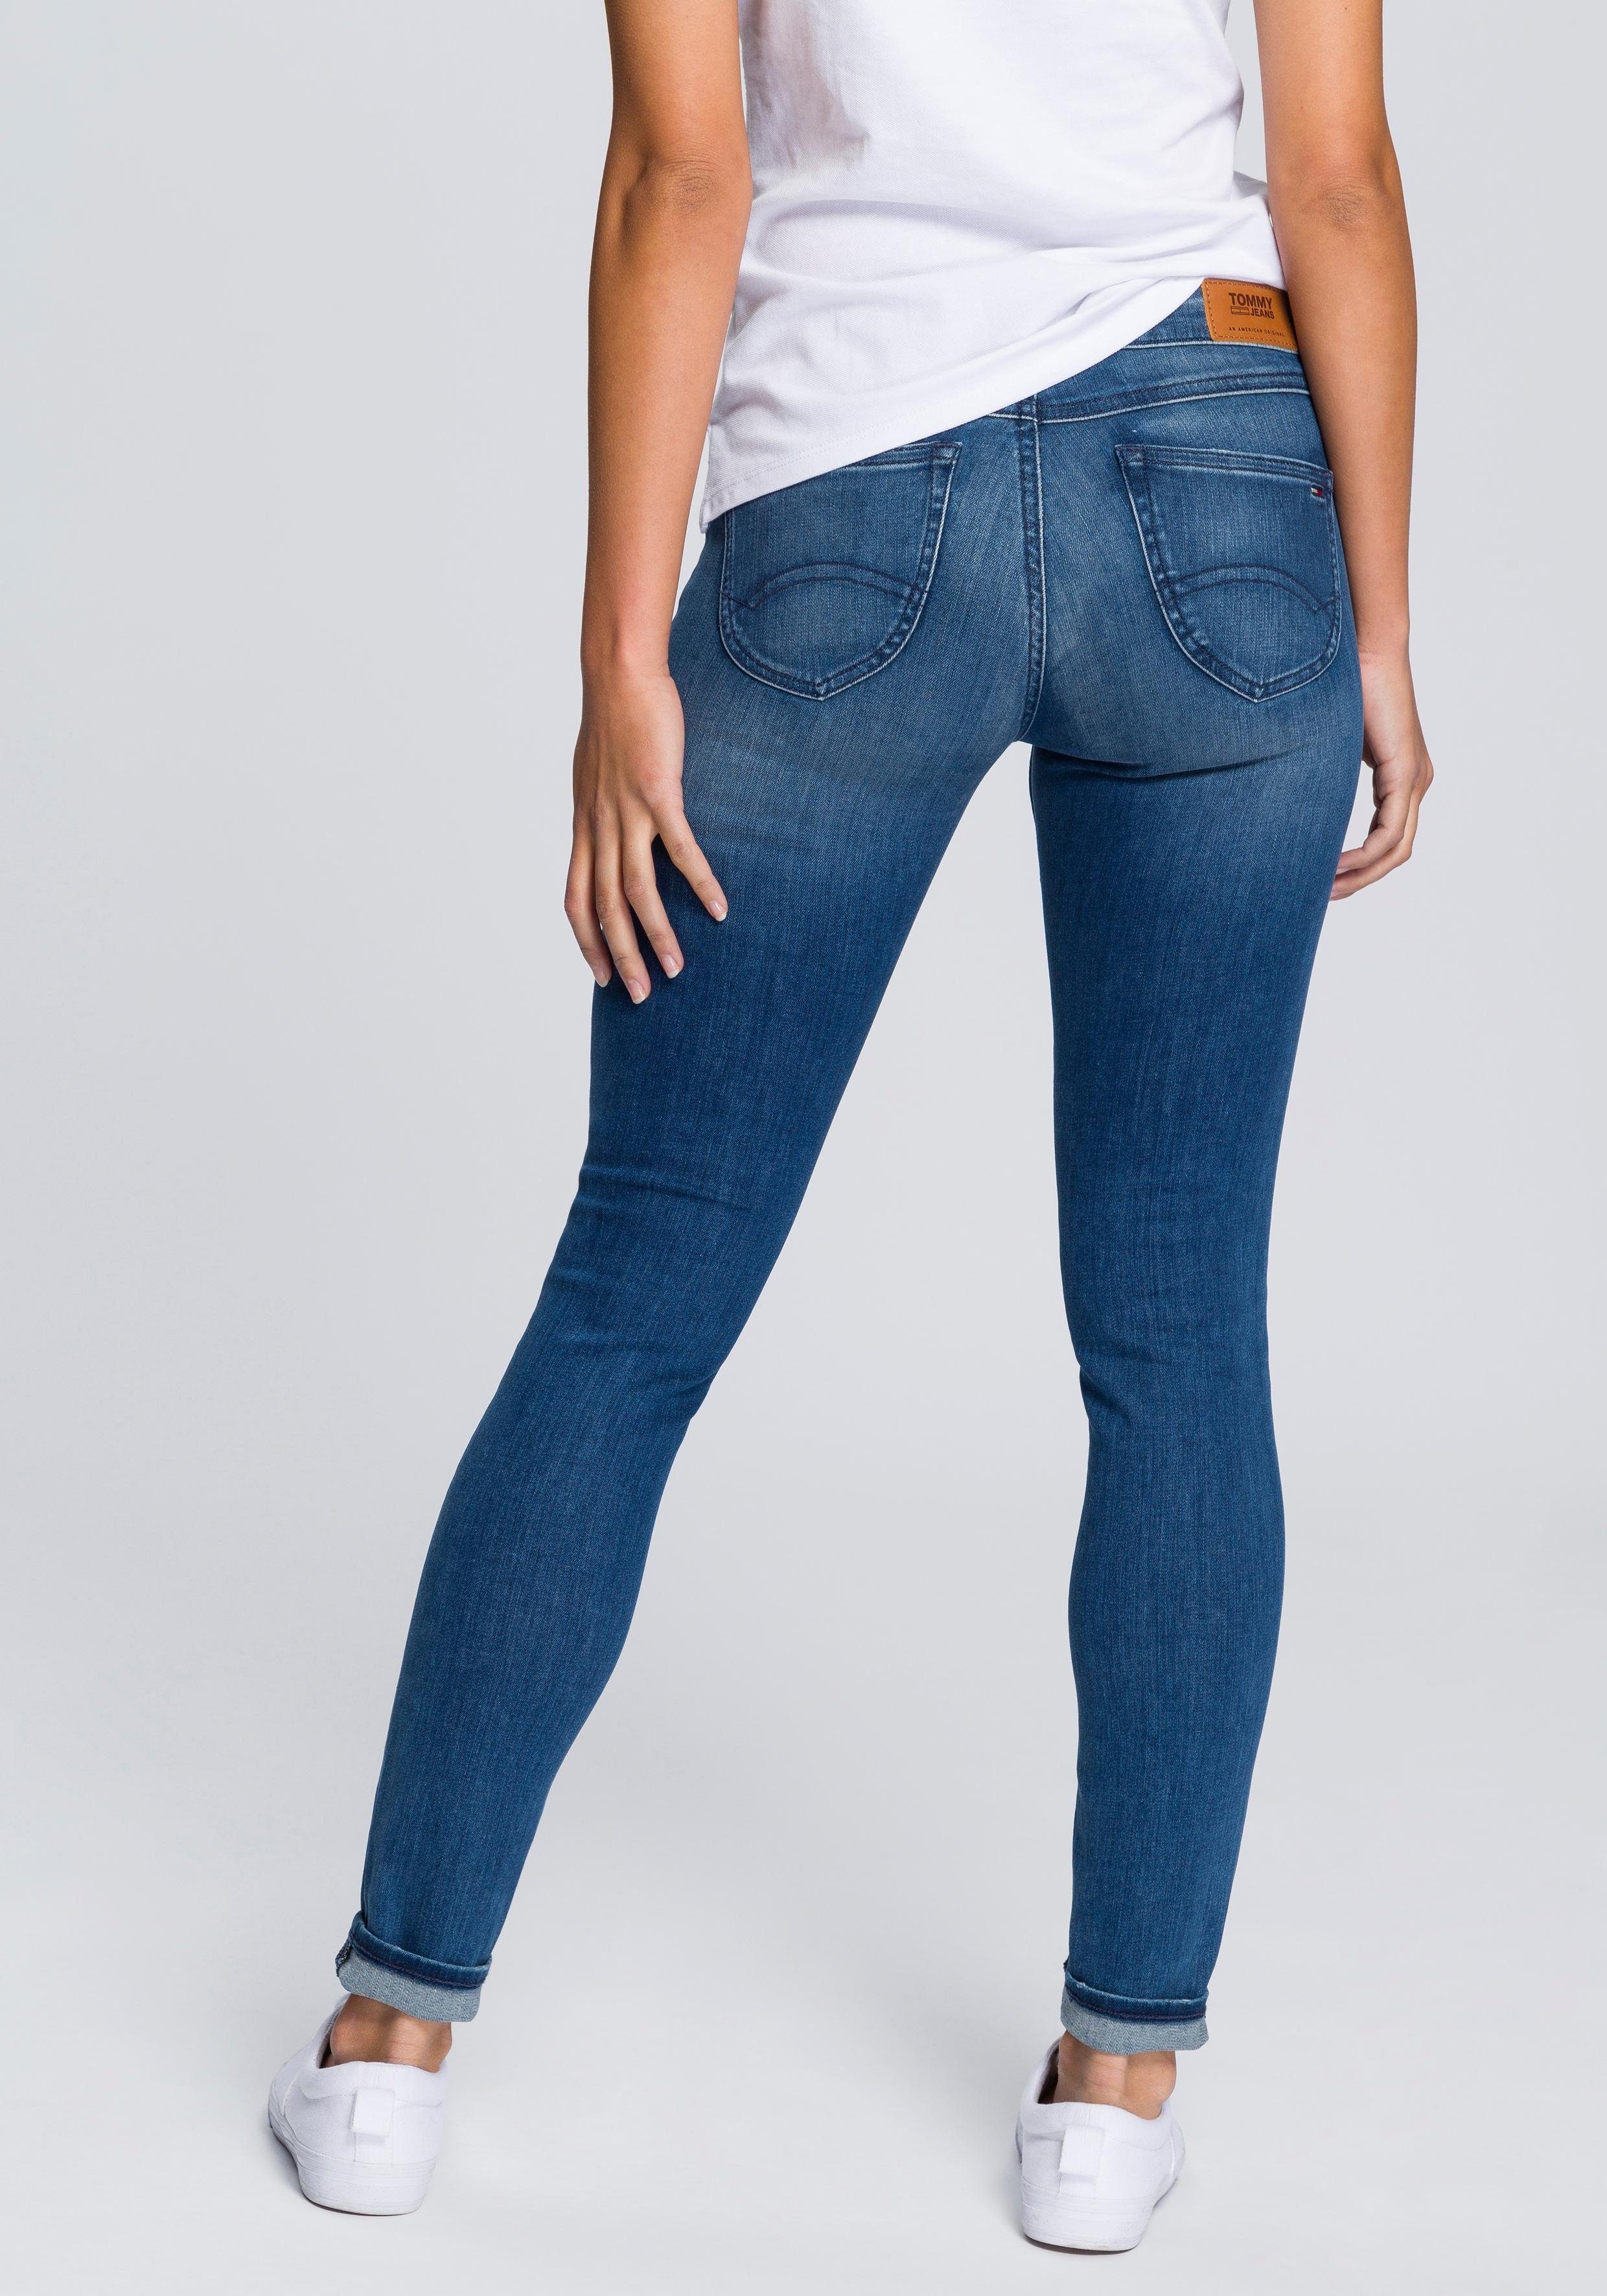 Kim Depo At sophie jeans tommy hilfiger - snacks2home.com